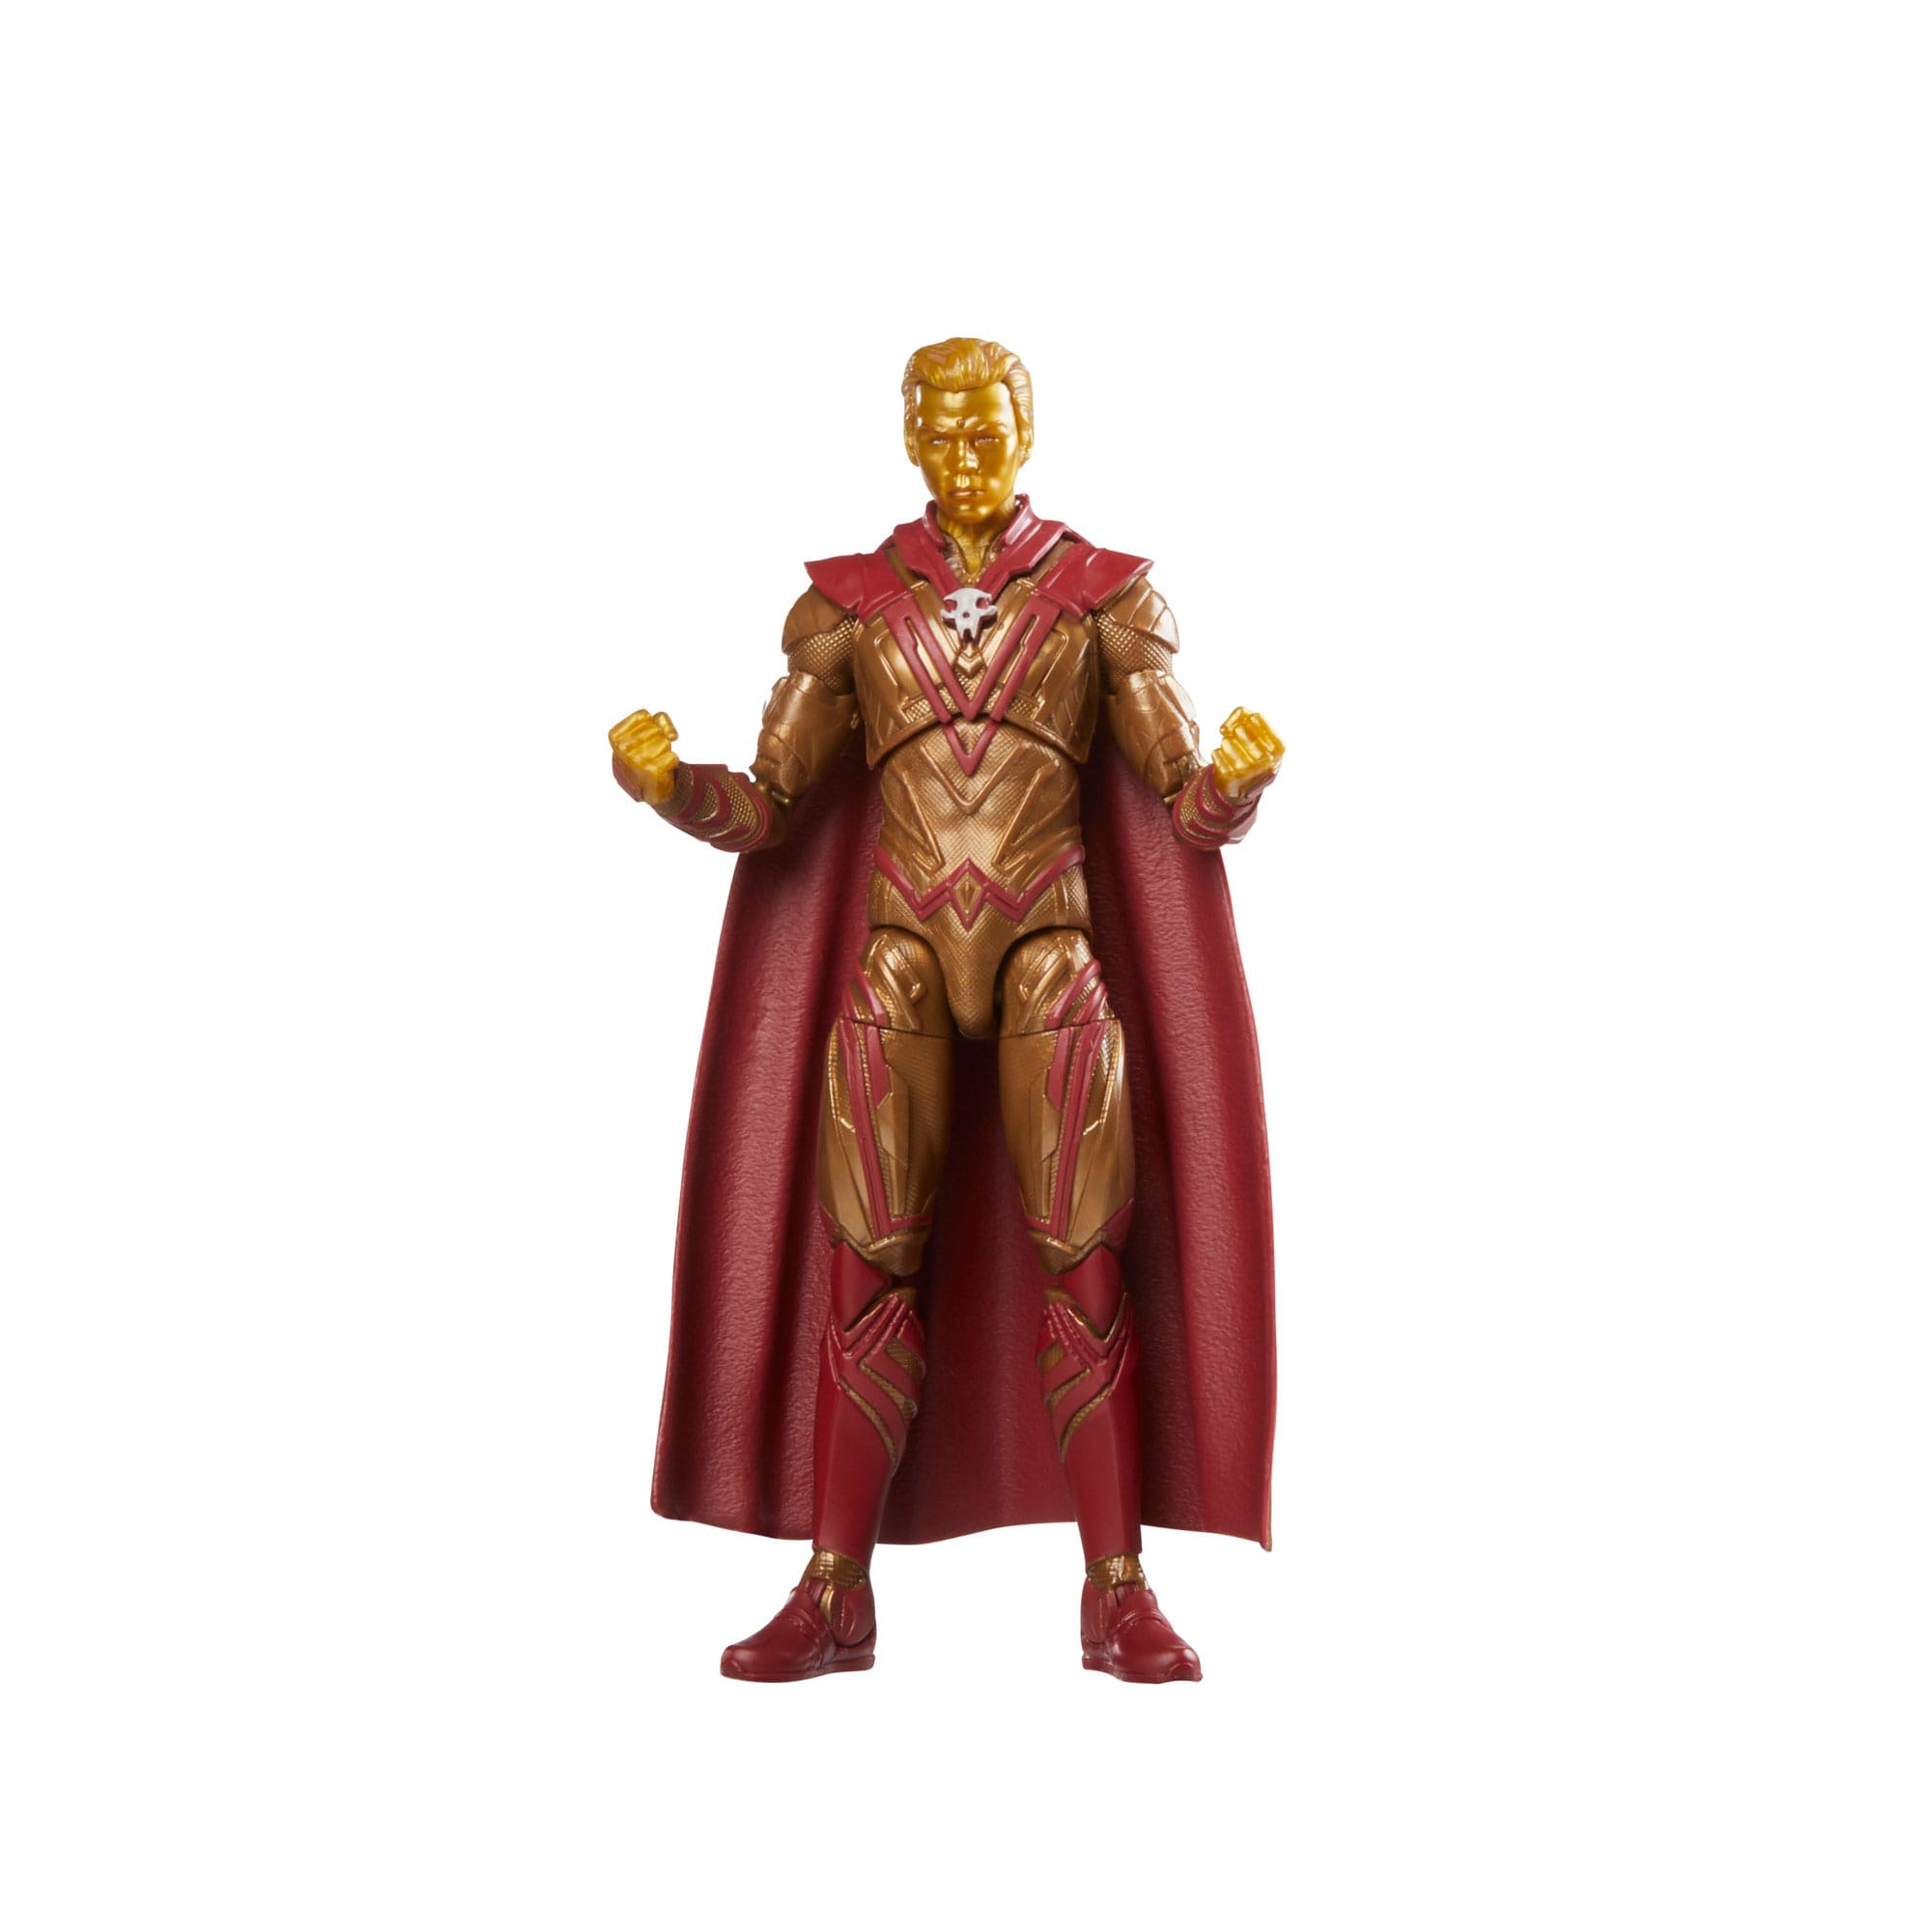 Guardians of the Galaxy Comics Marvel Legends Actionfigur Warlock 15 cm HASF6609 5010994179861